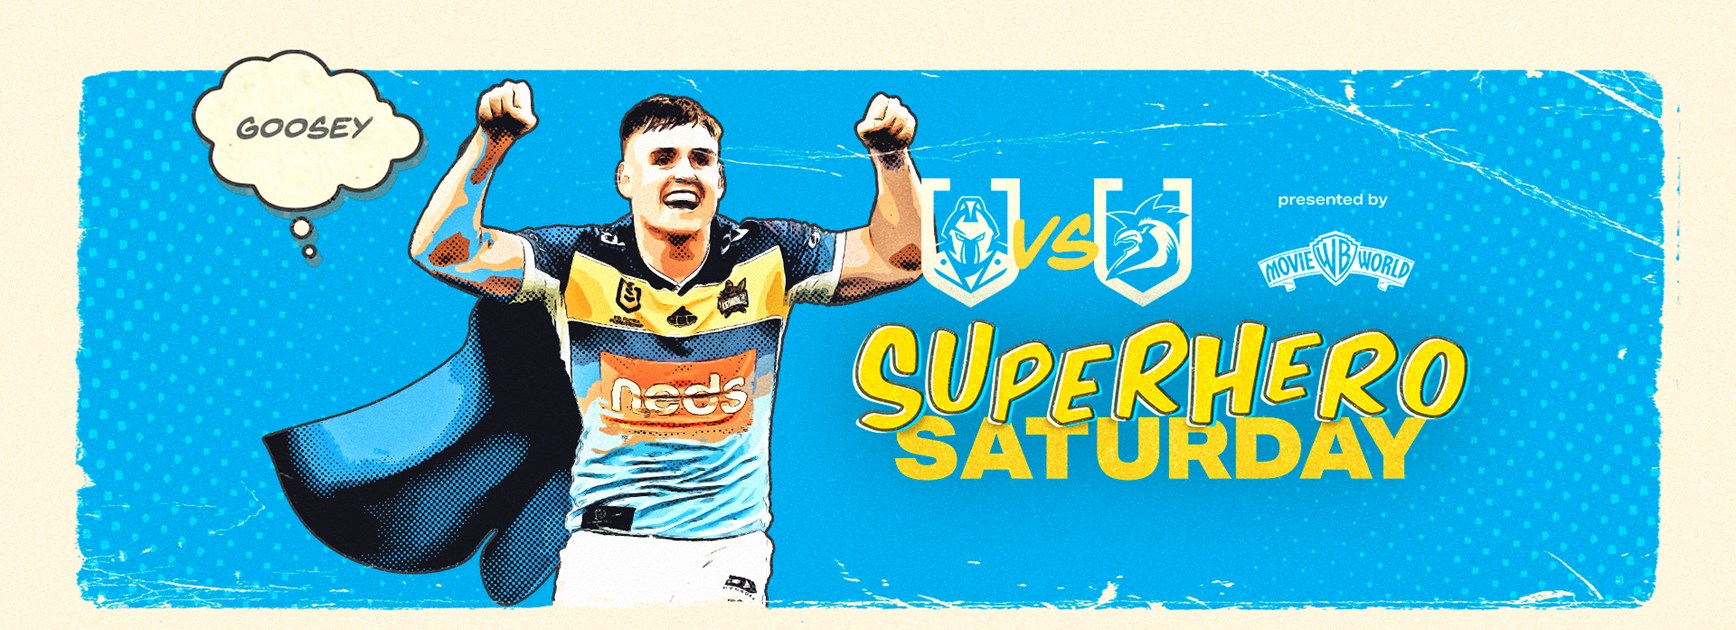 'Superhero Saturday' to take over Cbus this weekend